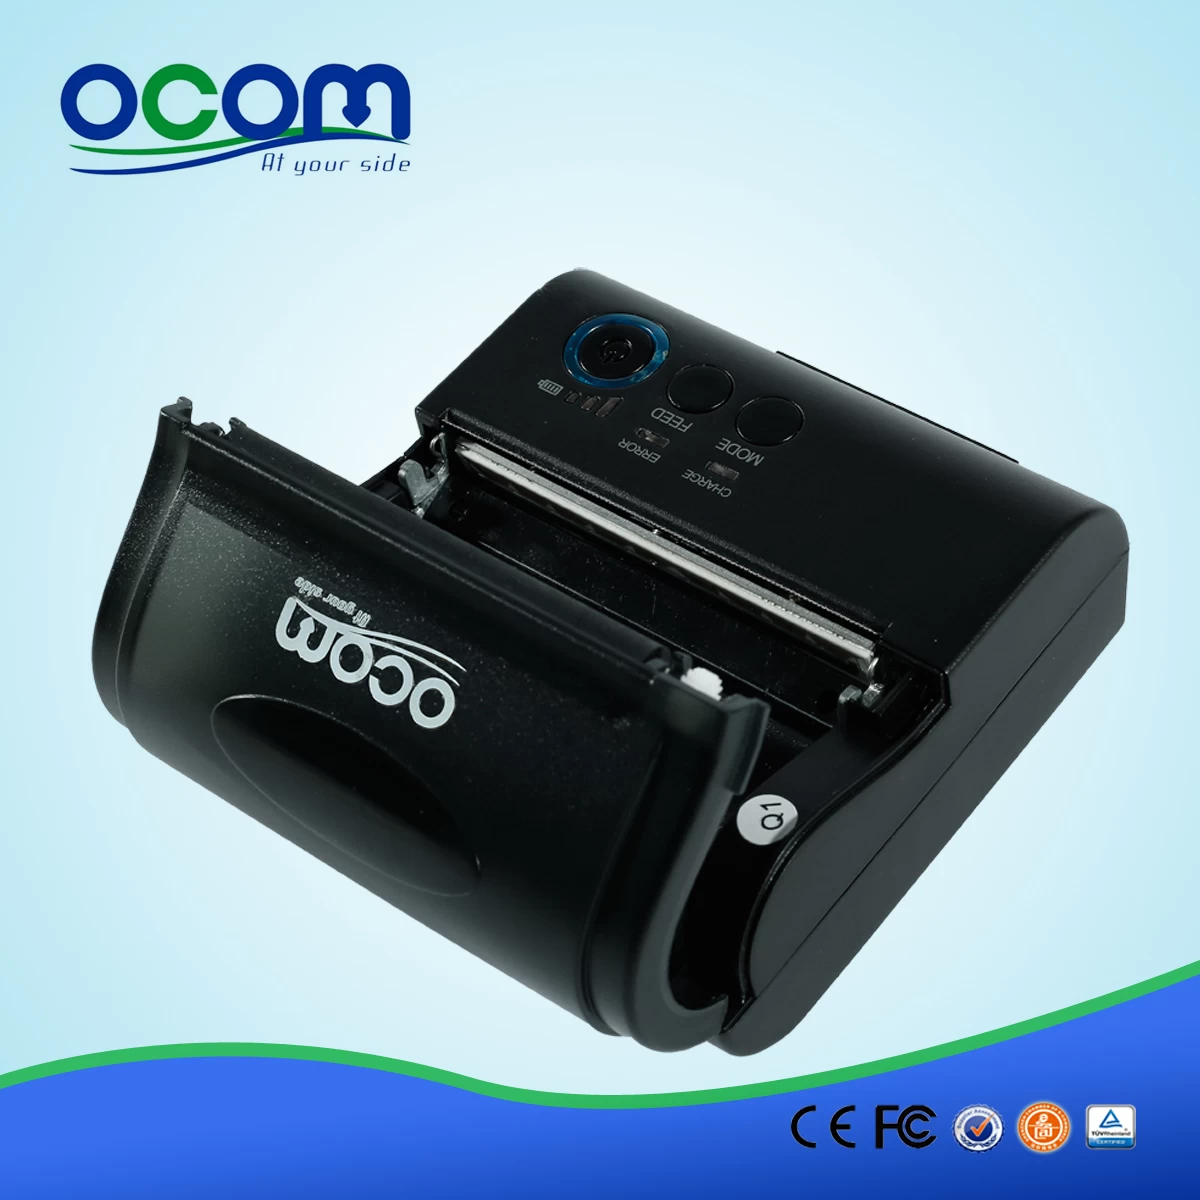 OCPP-M082: China factory 80mm  bluetooth printer, bluetooth printer pos